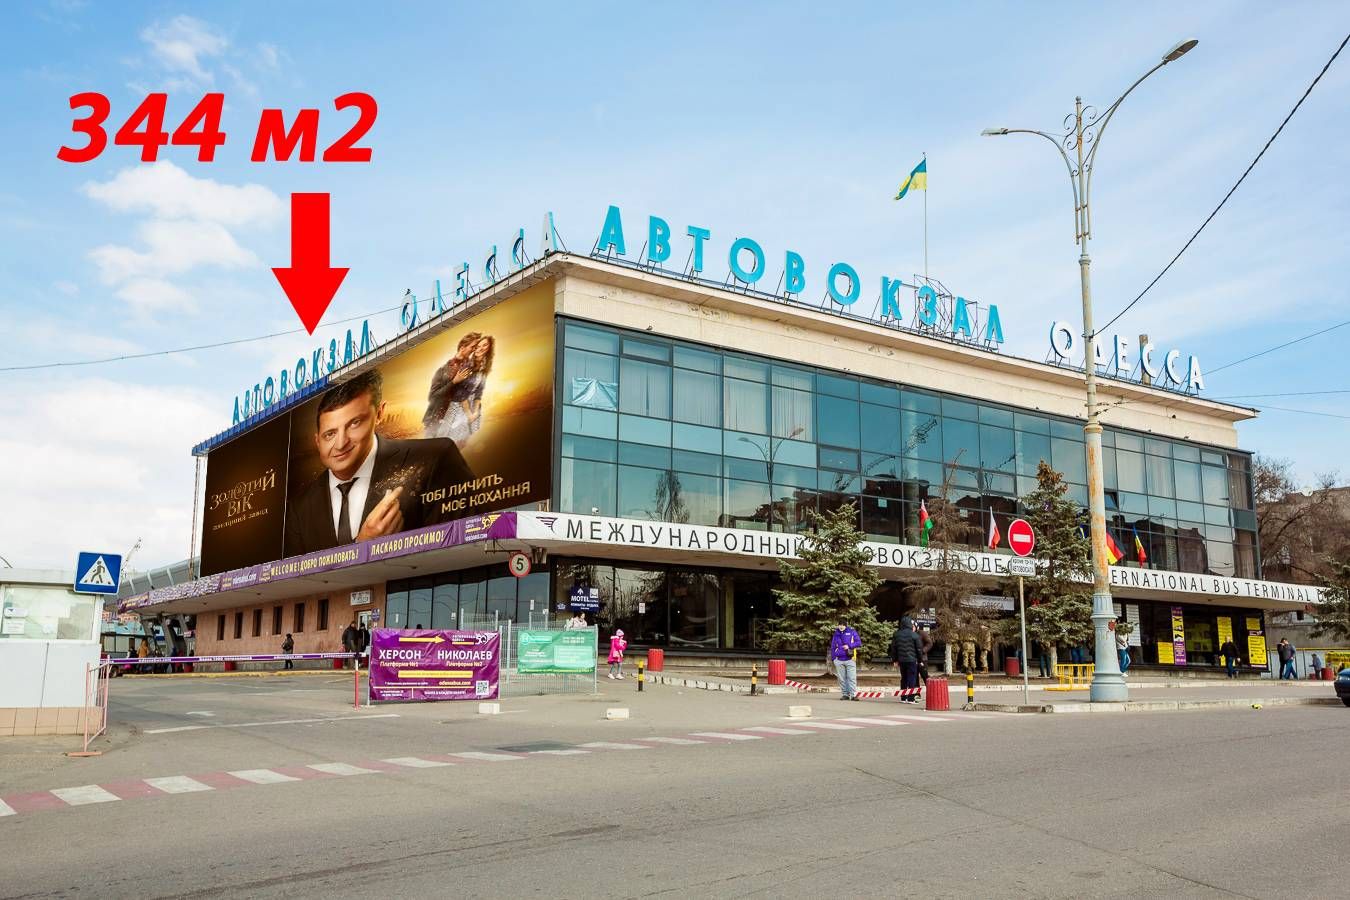 Реклама на фасадах/Брандмауэр, Одесса, ул. Колонтаевская, 58.